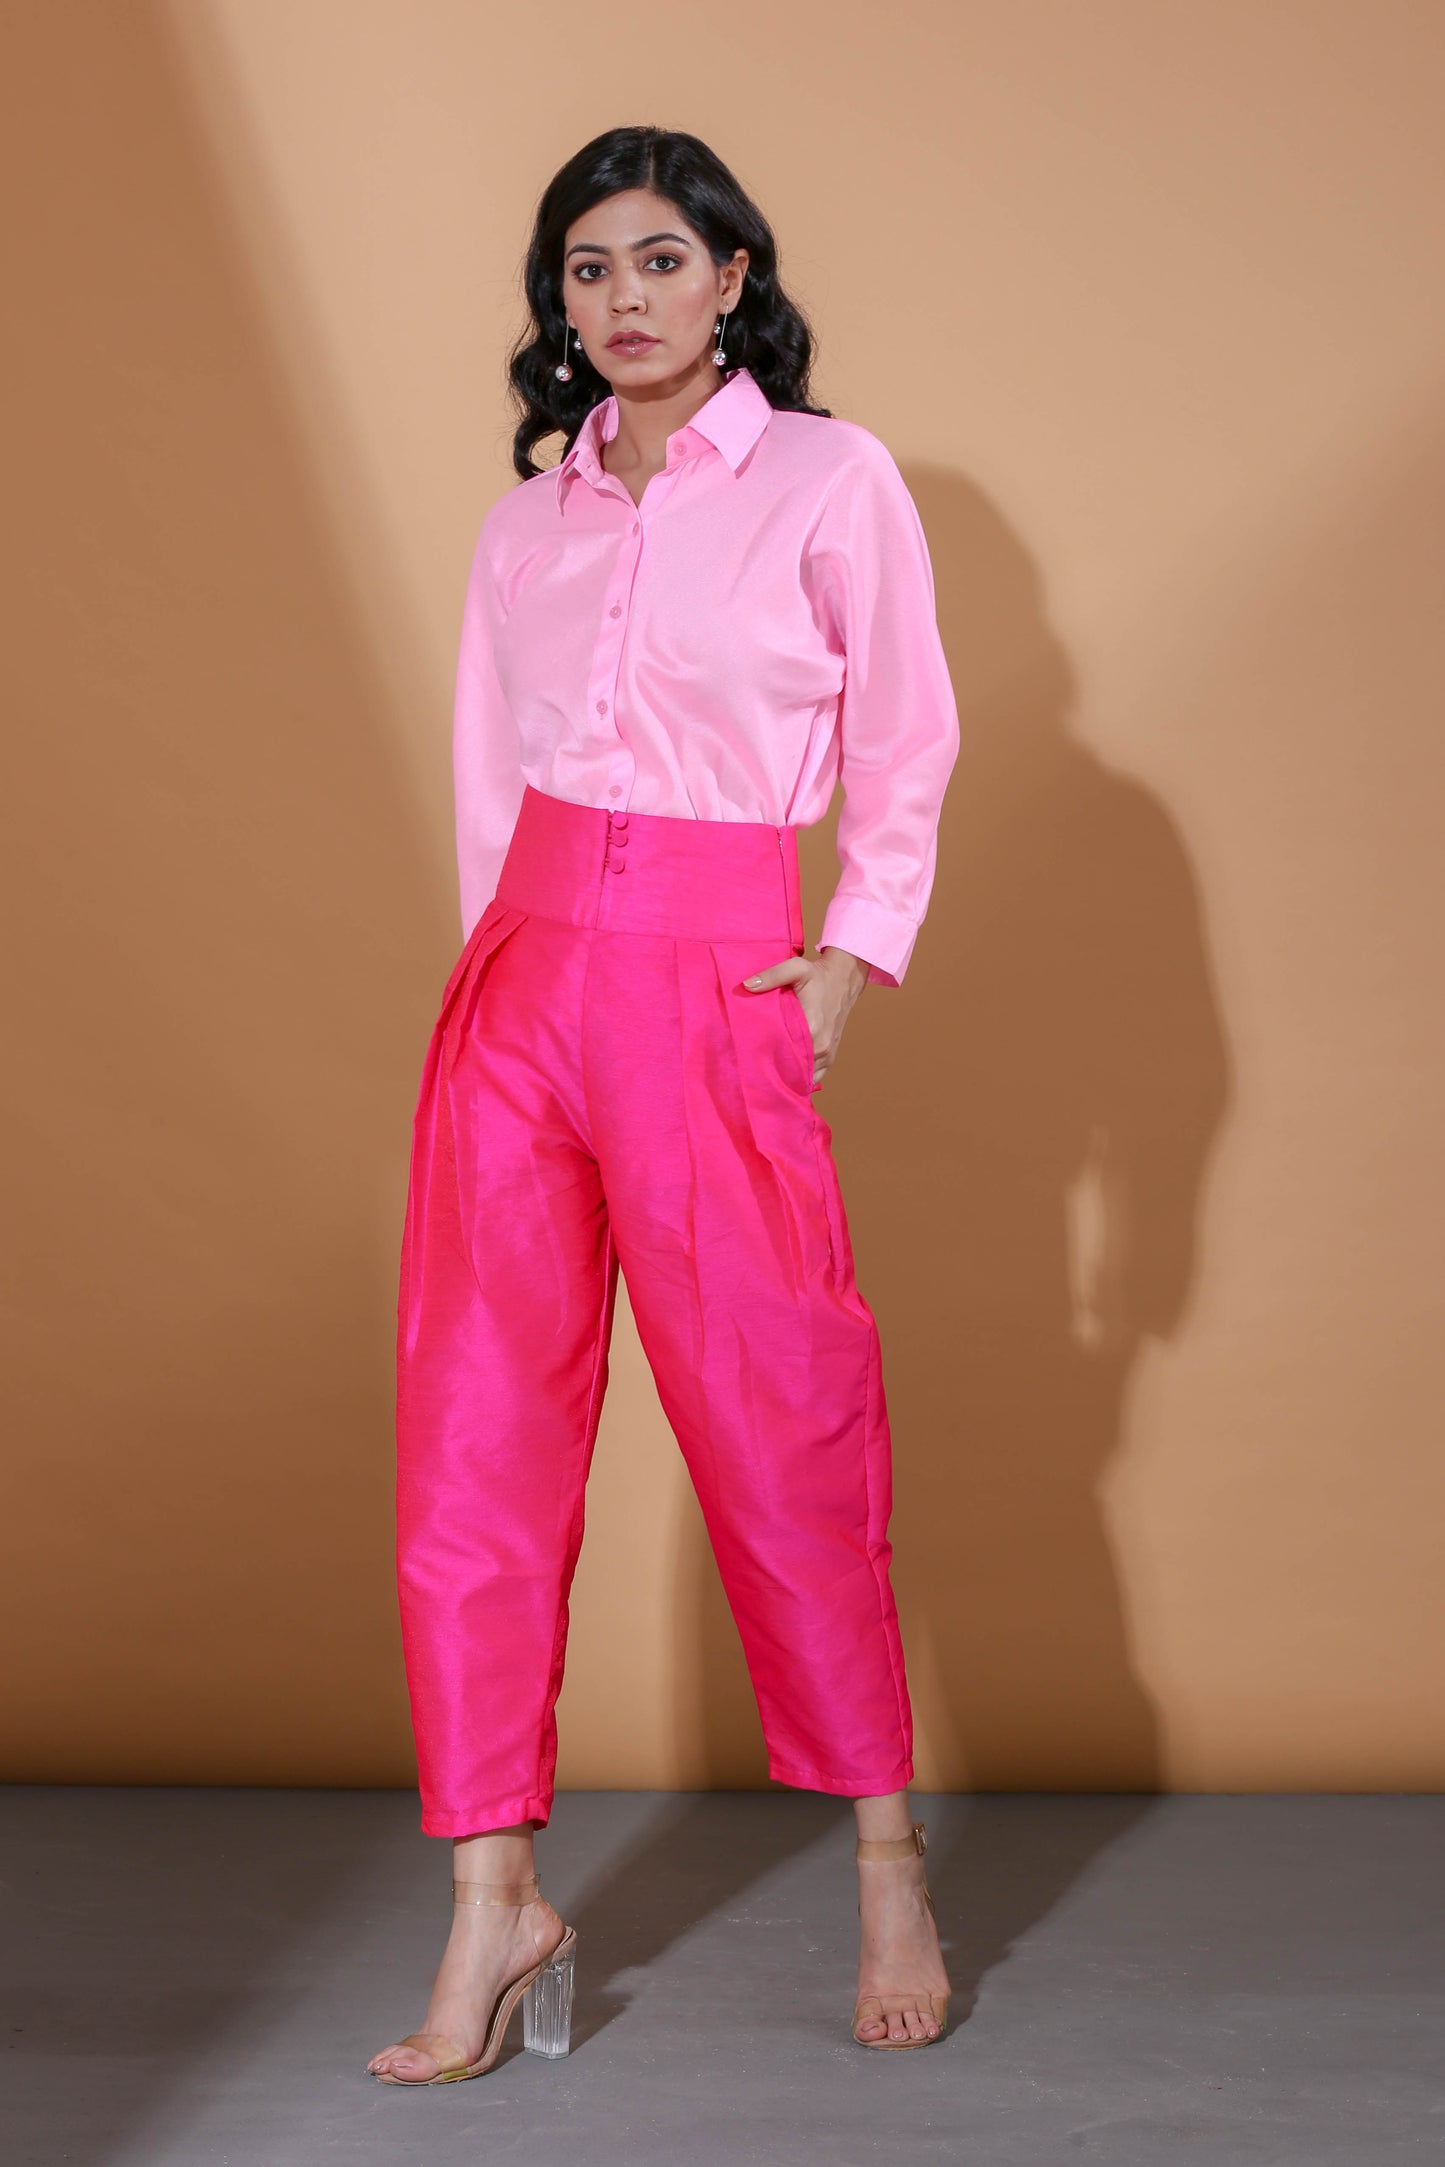 Adhikam- Monochromatic neon pink formal set